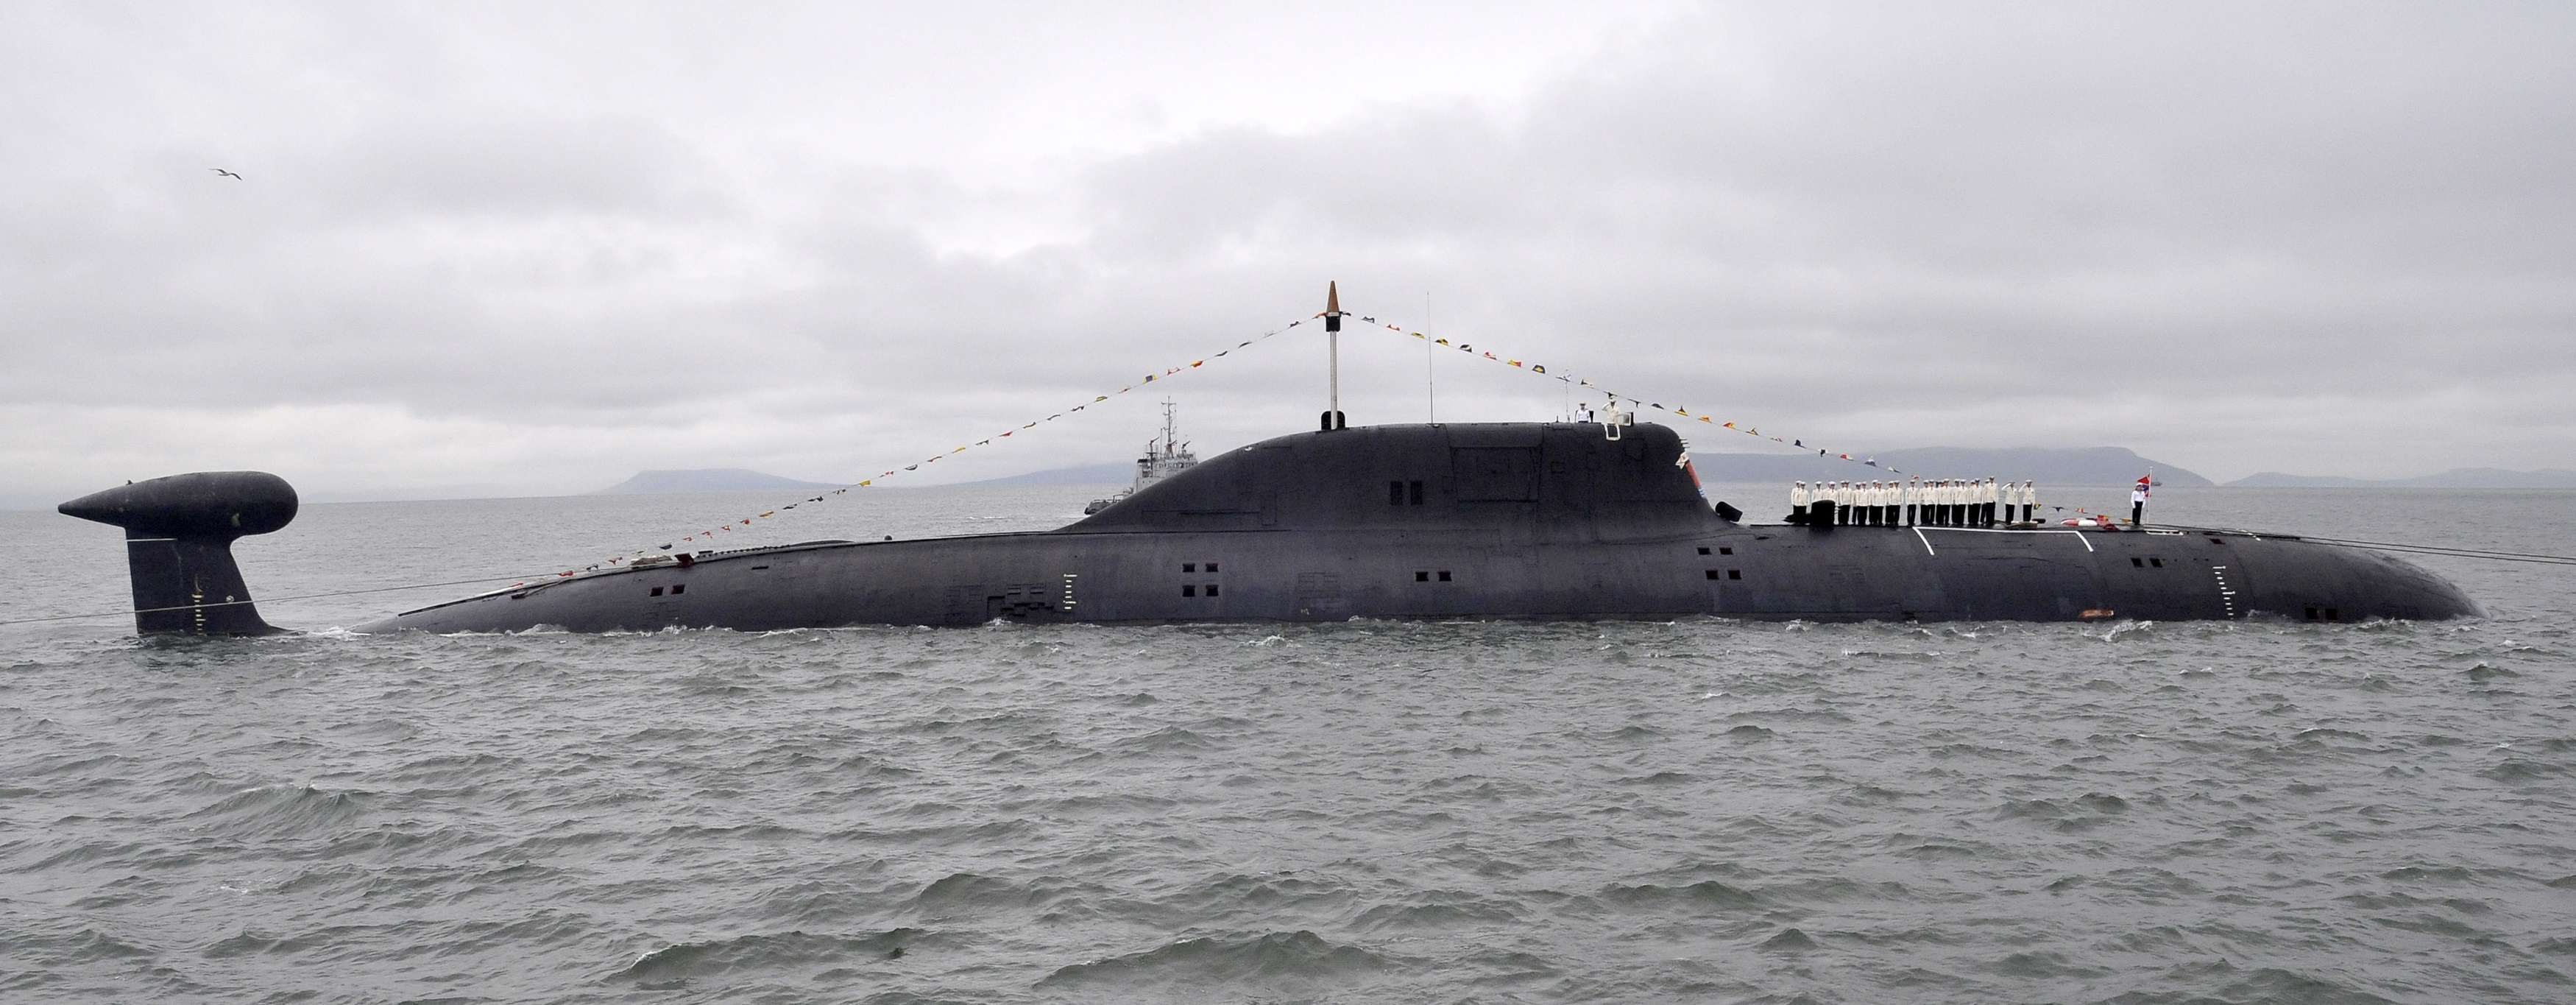 russian submarine watch